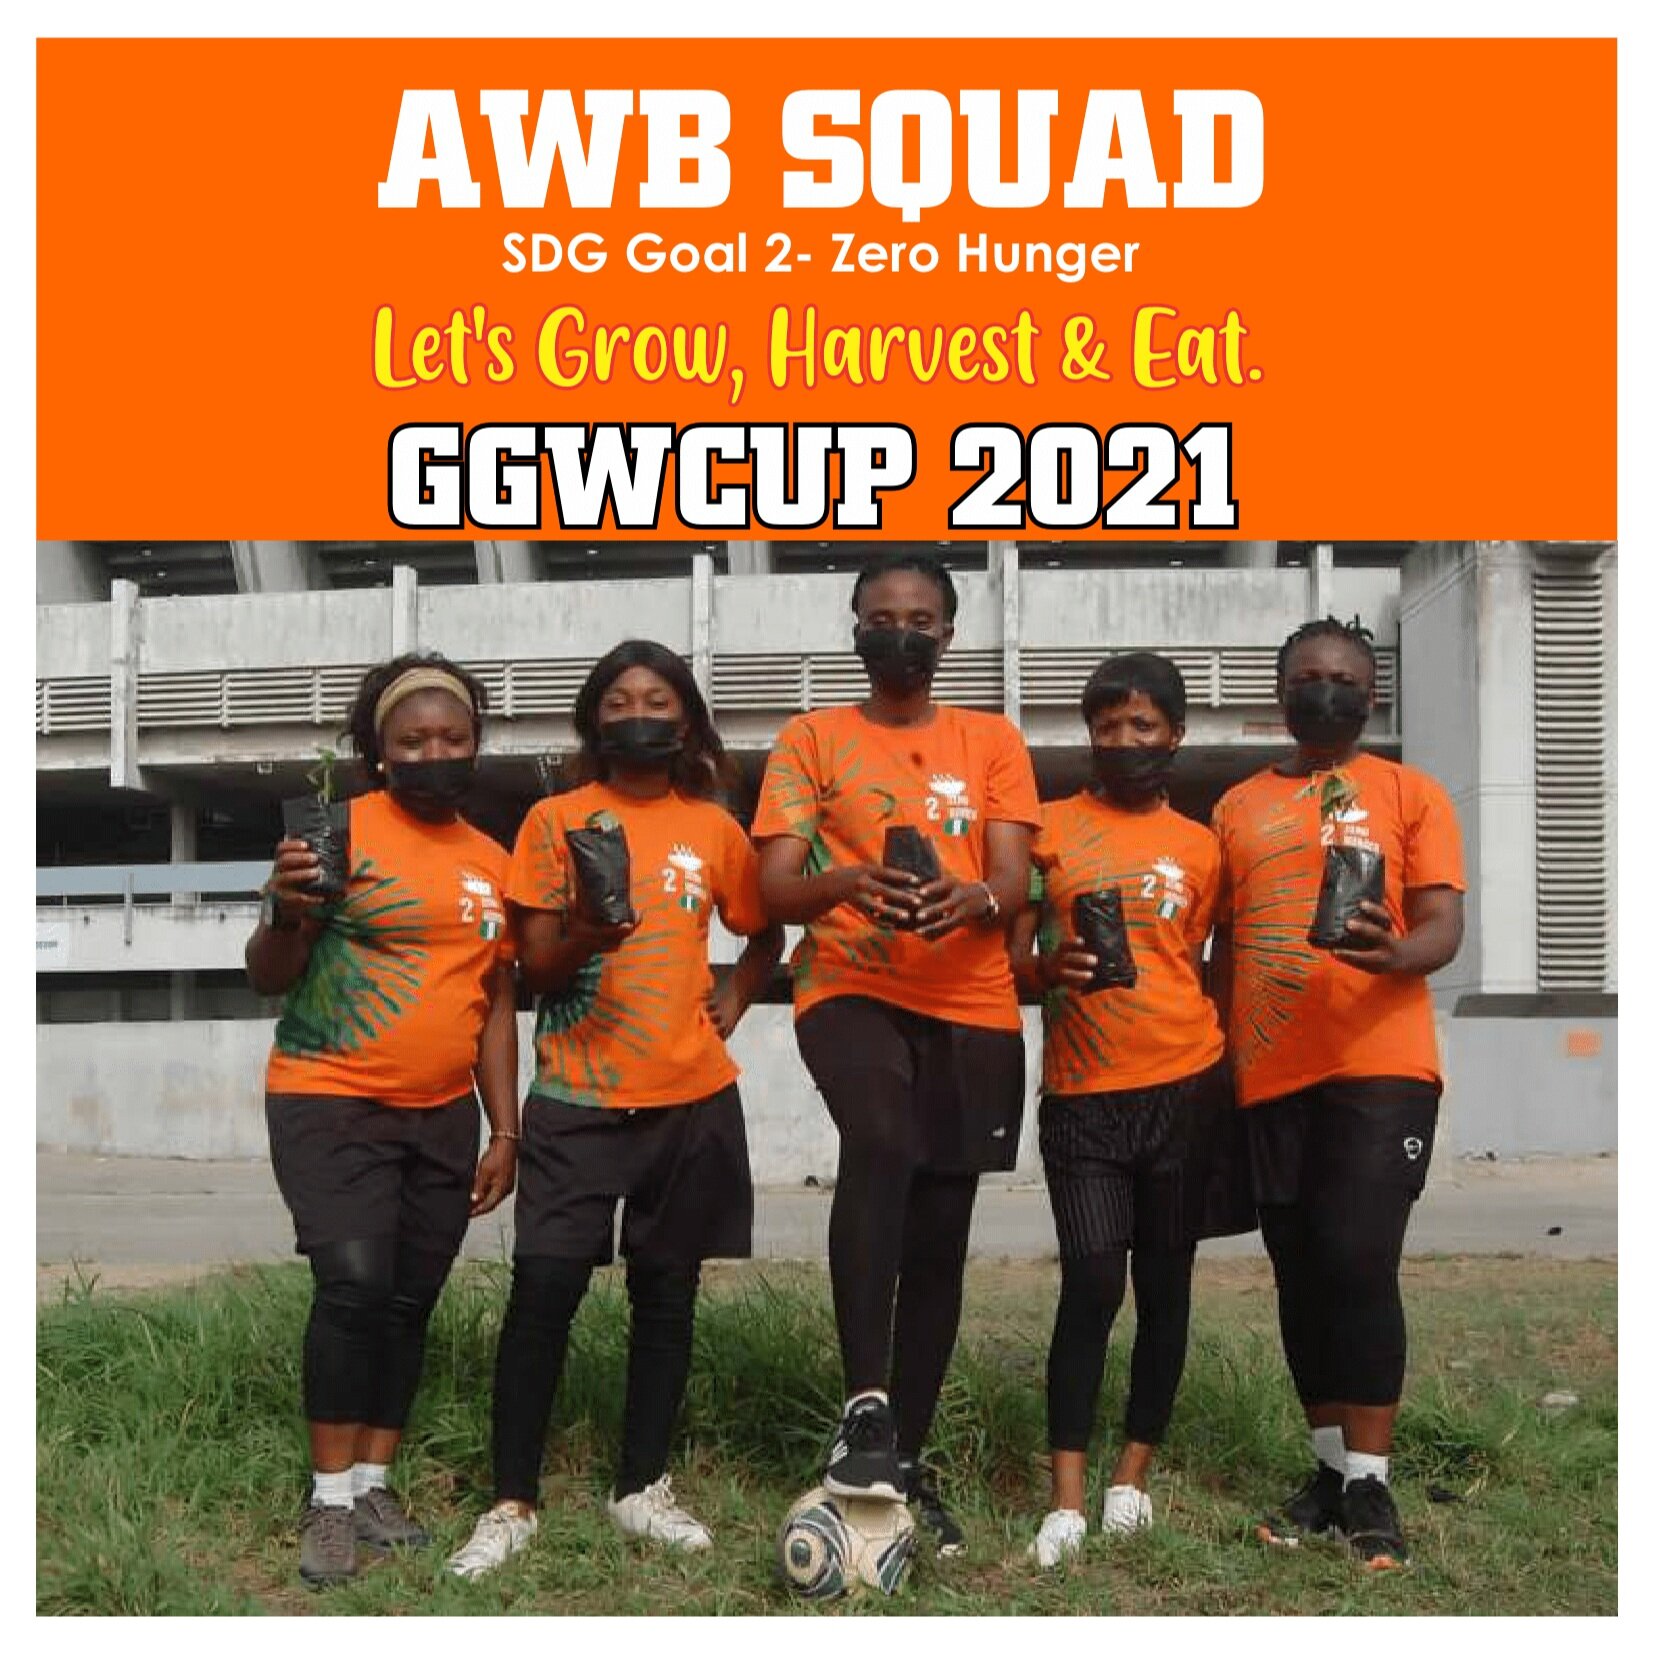 GGWCUP-team-AWB-SQUAD-SDG2-1.jpg